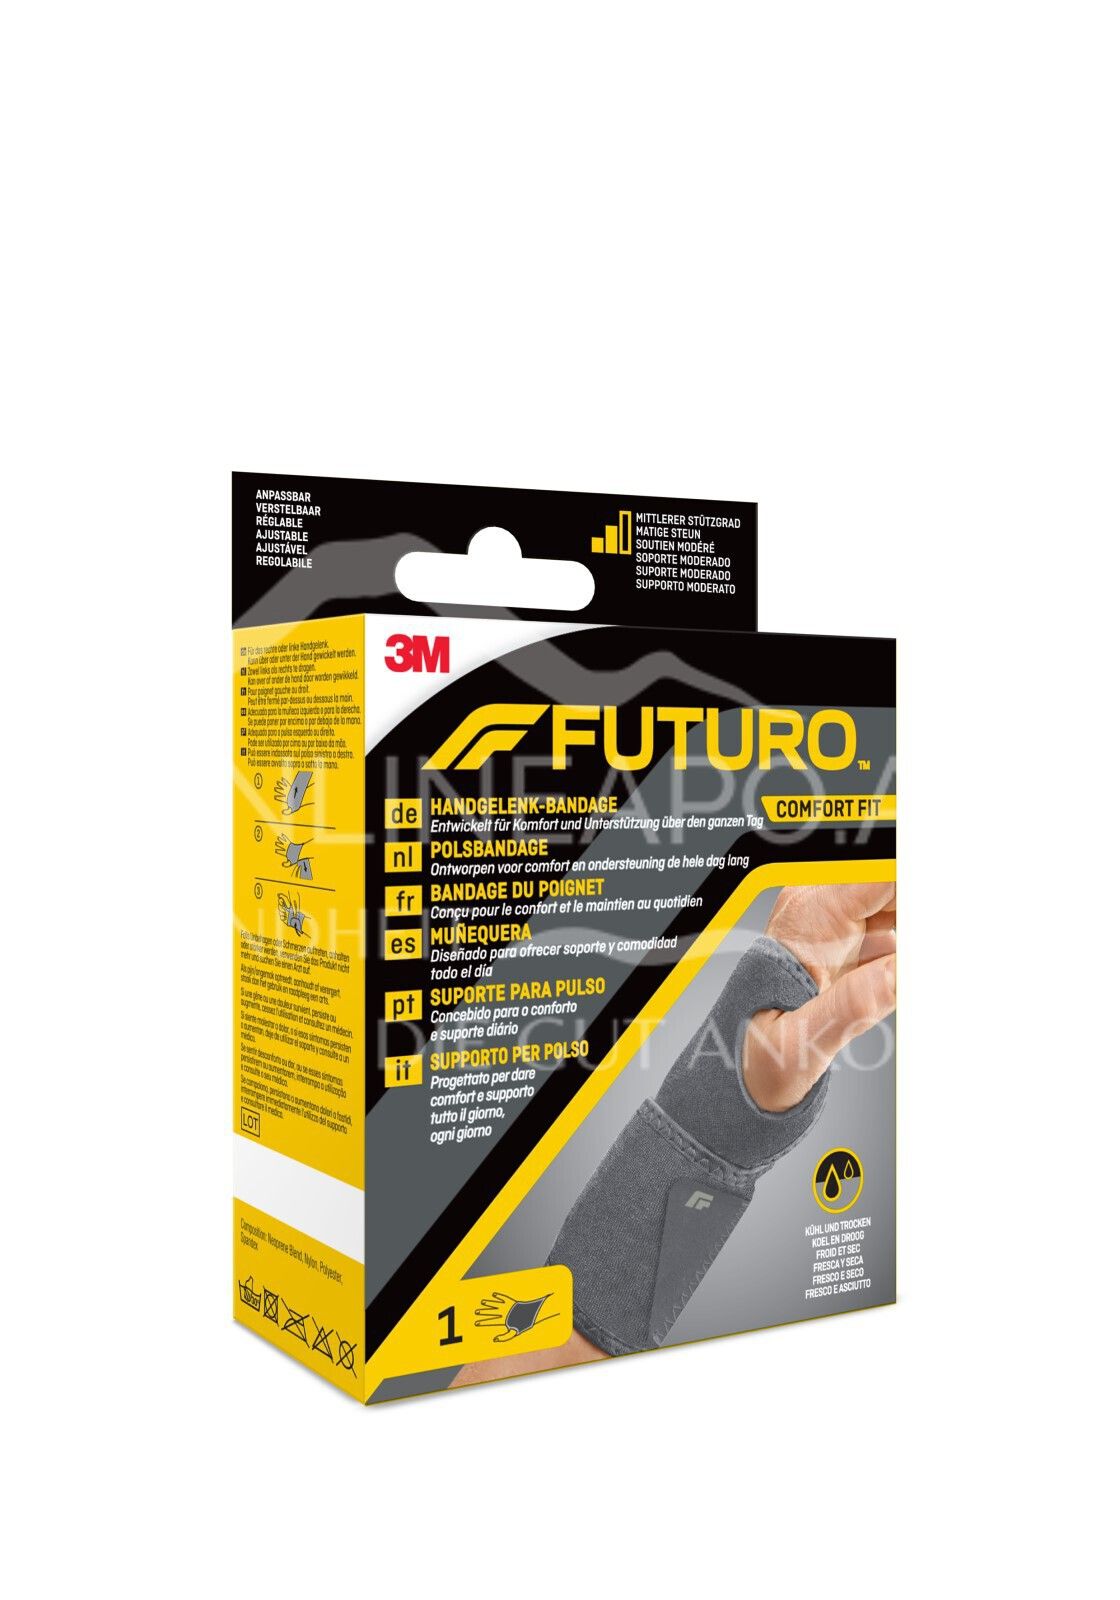 3M FUTURO™ Comfort Fit Handgelenk-Bandage 04036, Anpassbar